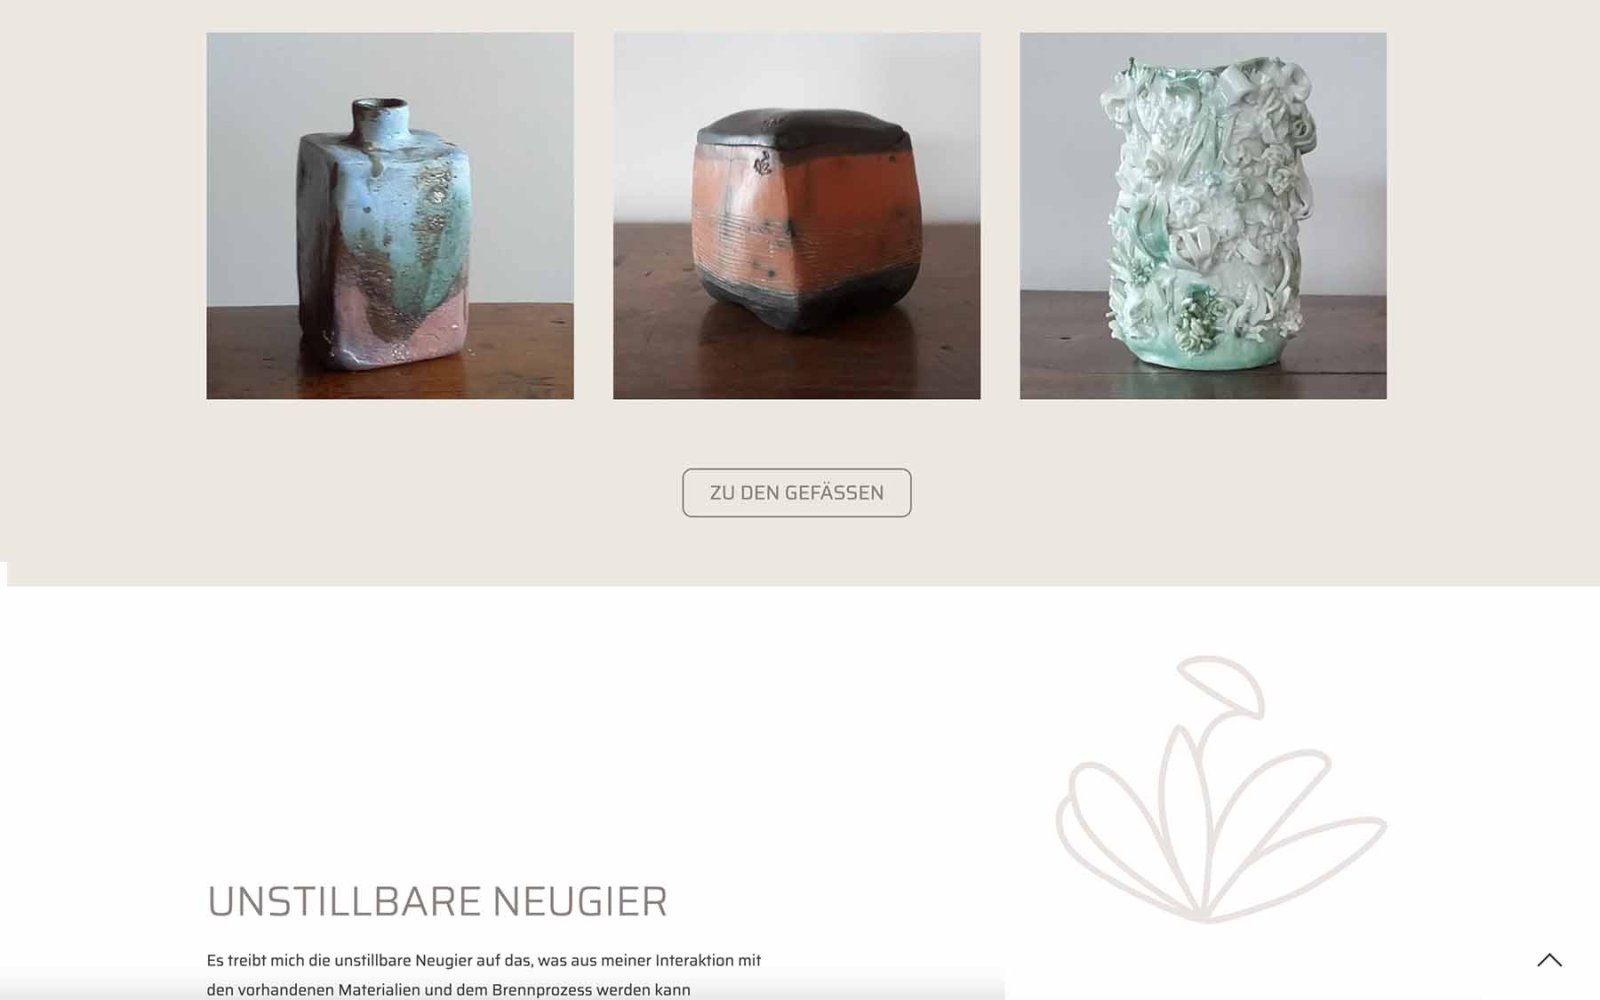 Startseite WabiSabine-Keramik, Scrolldown 3 Bilder Keramikgefäße